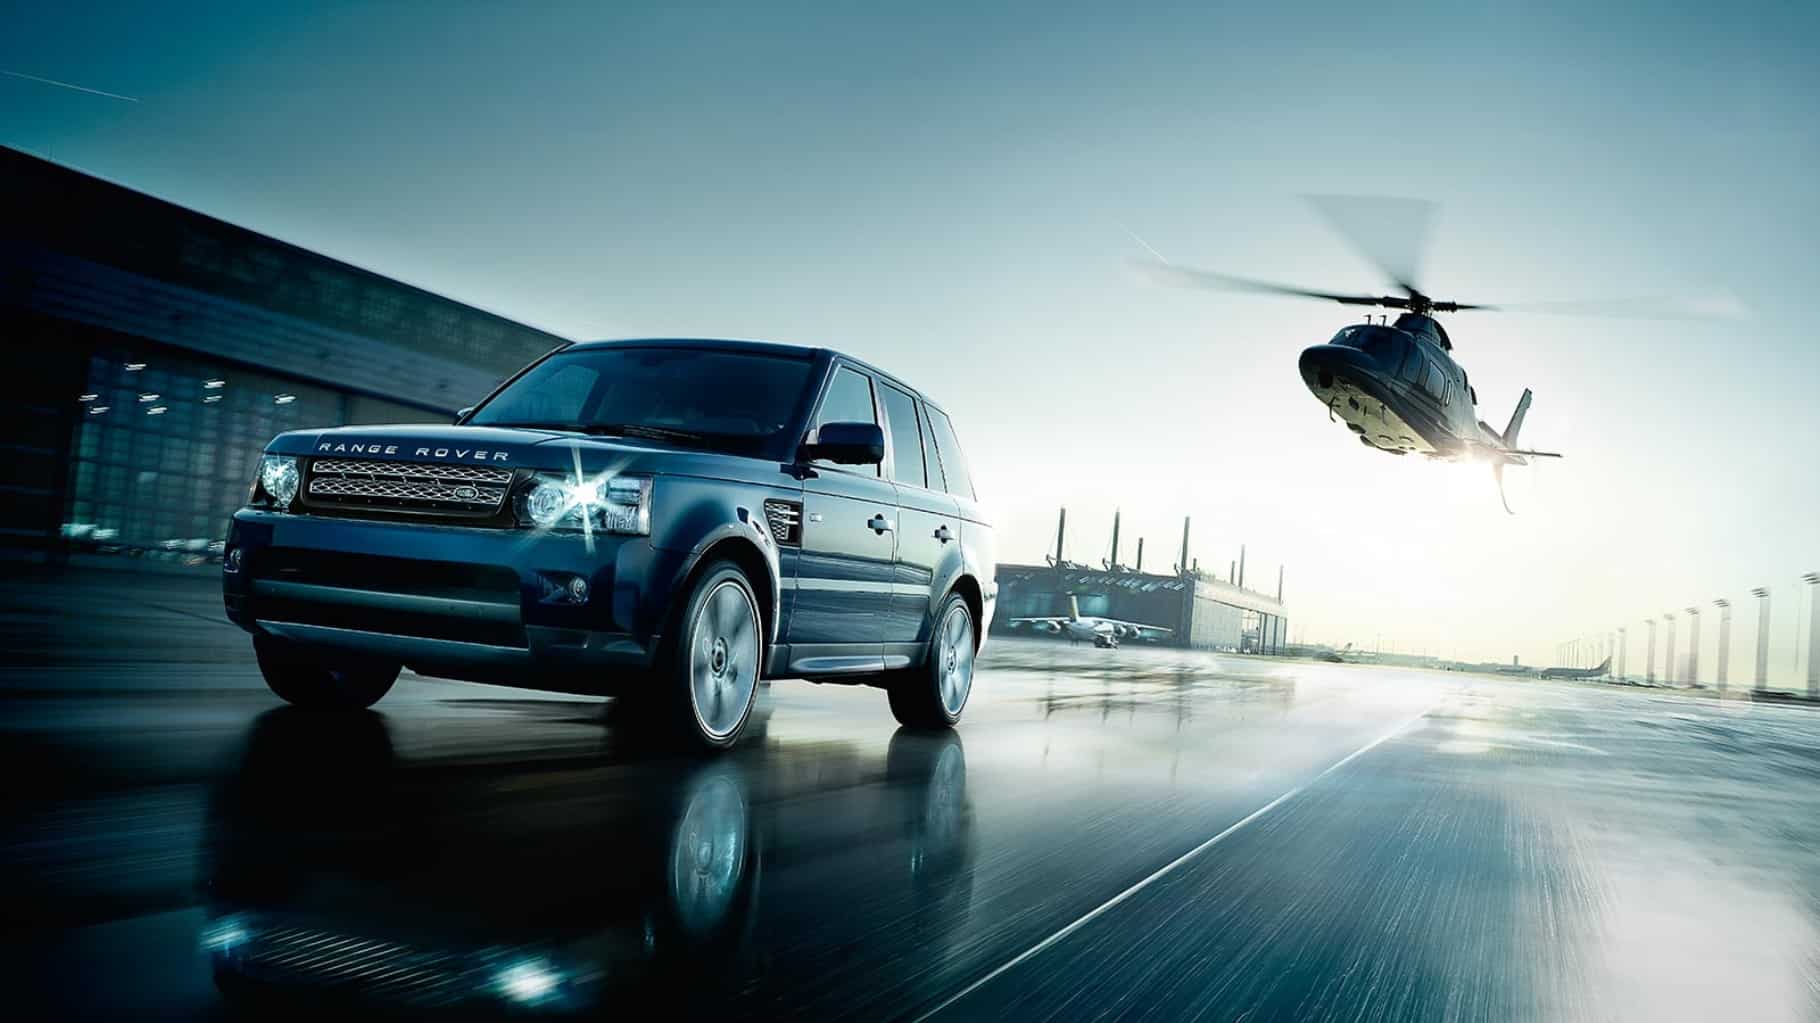 Range Rover Sport offered enhanced performance